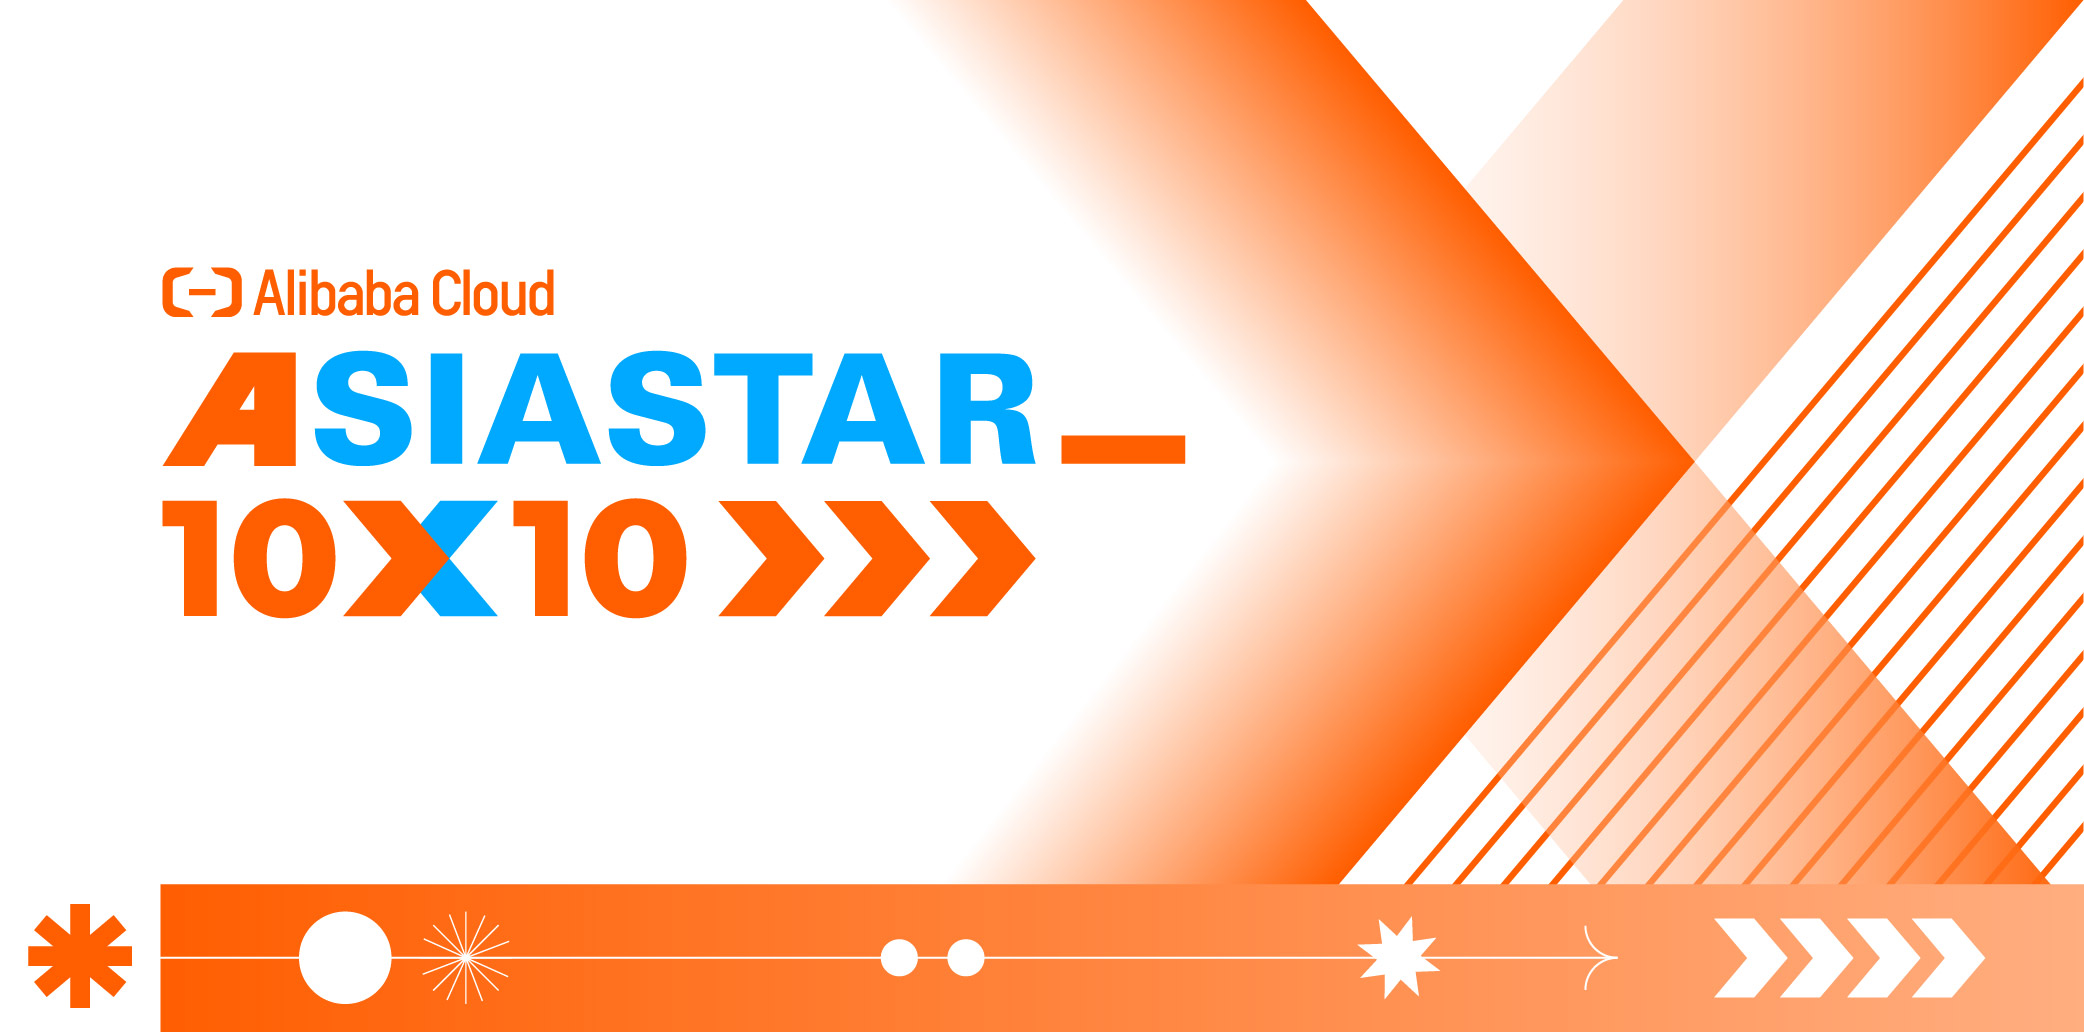 Alibaba cloud. Asiastar компания. Asiastar logo PNG. Asia star